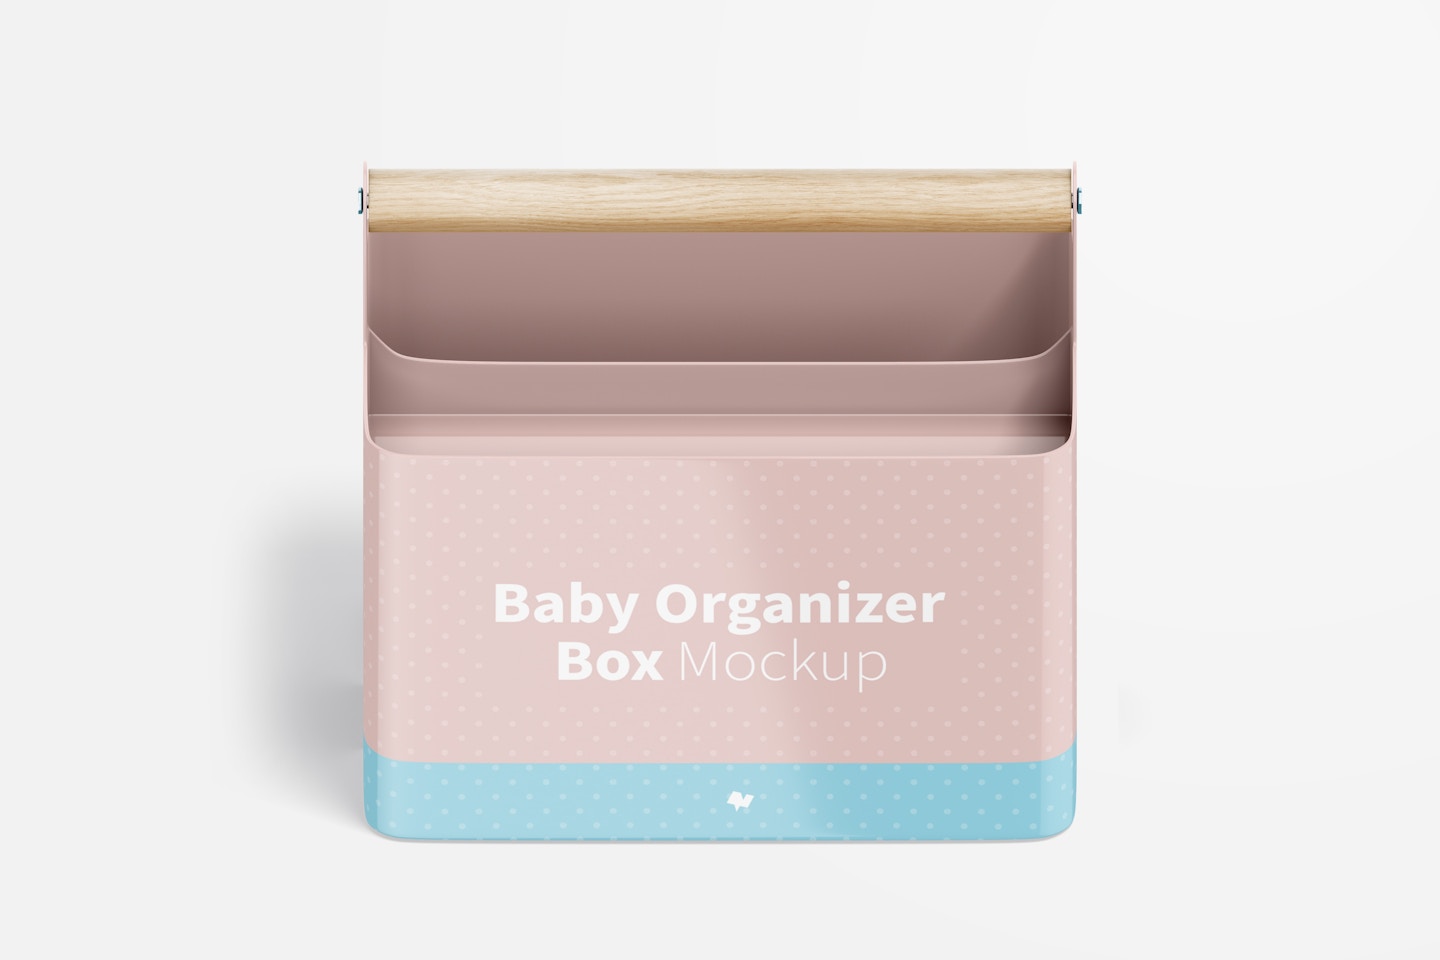 Baby Organizer Box Mockup, Isometric Front View